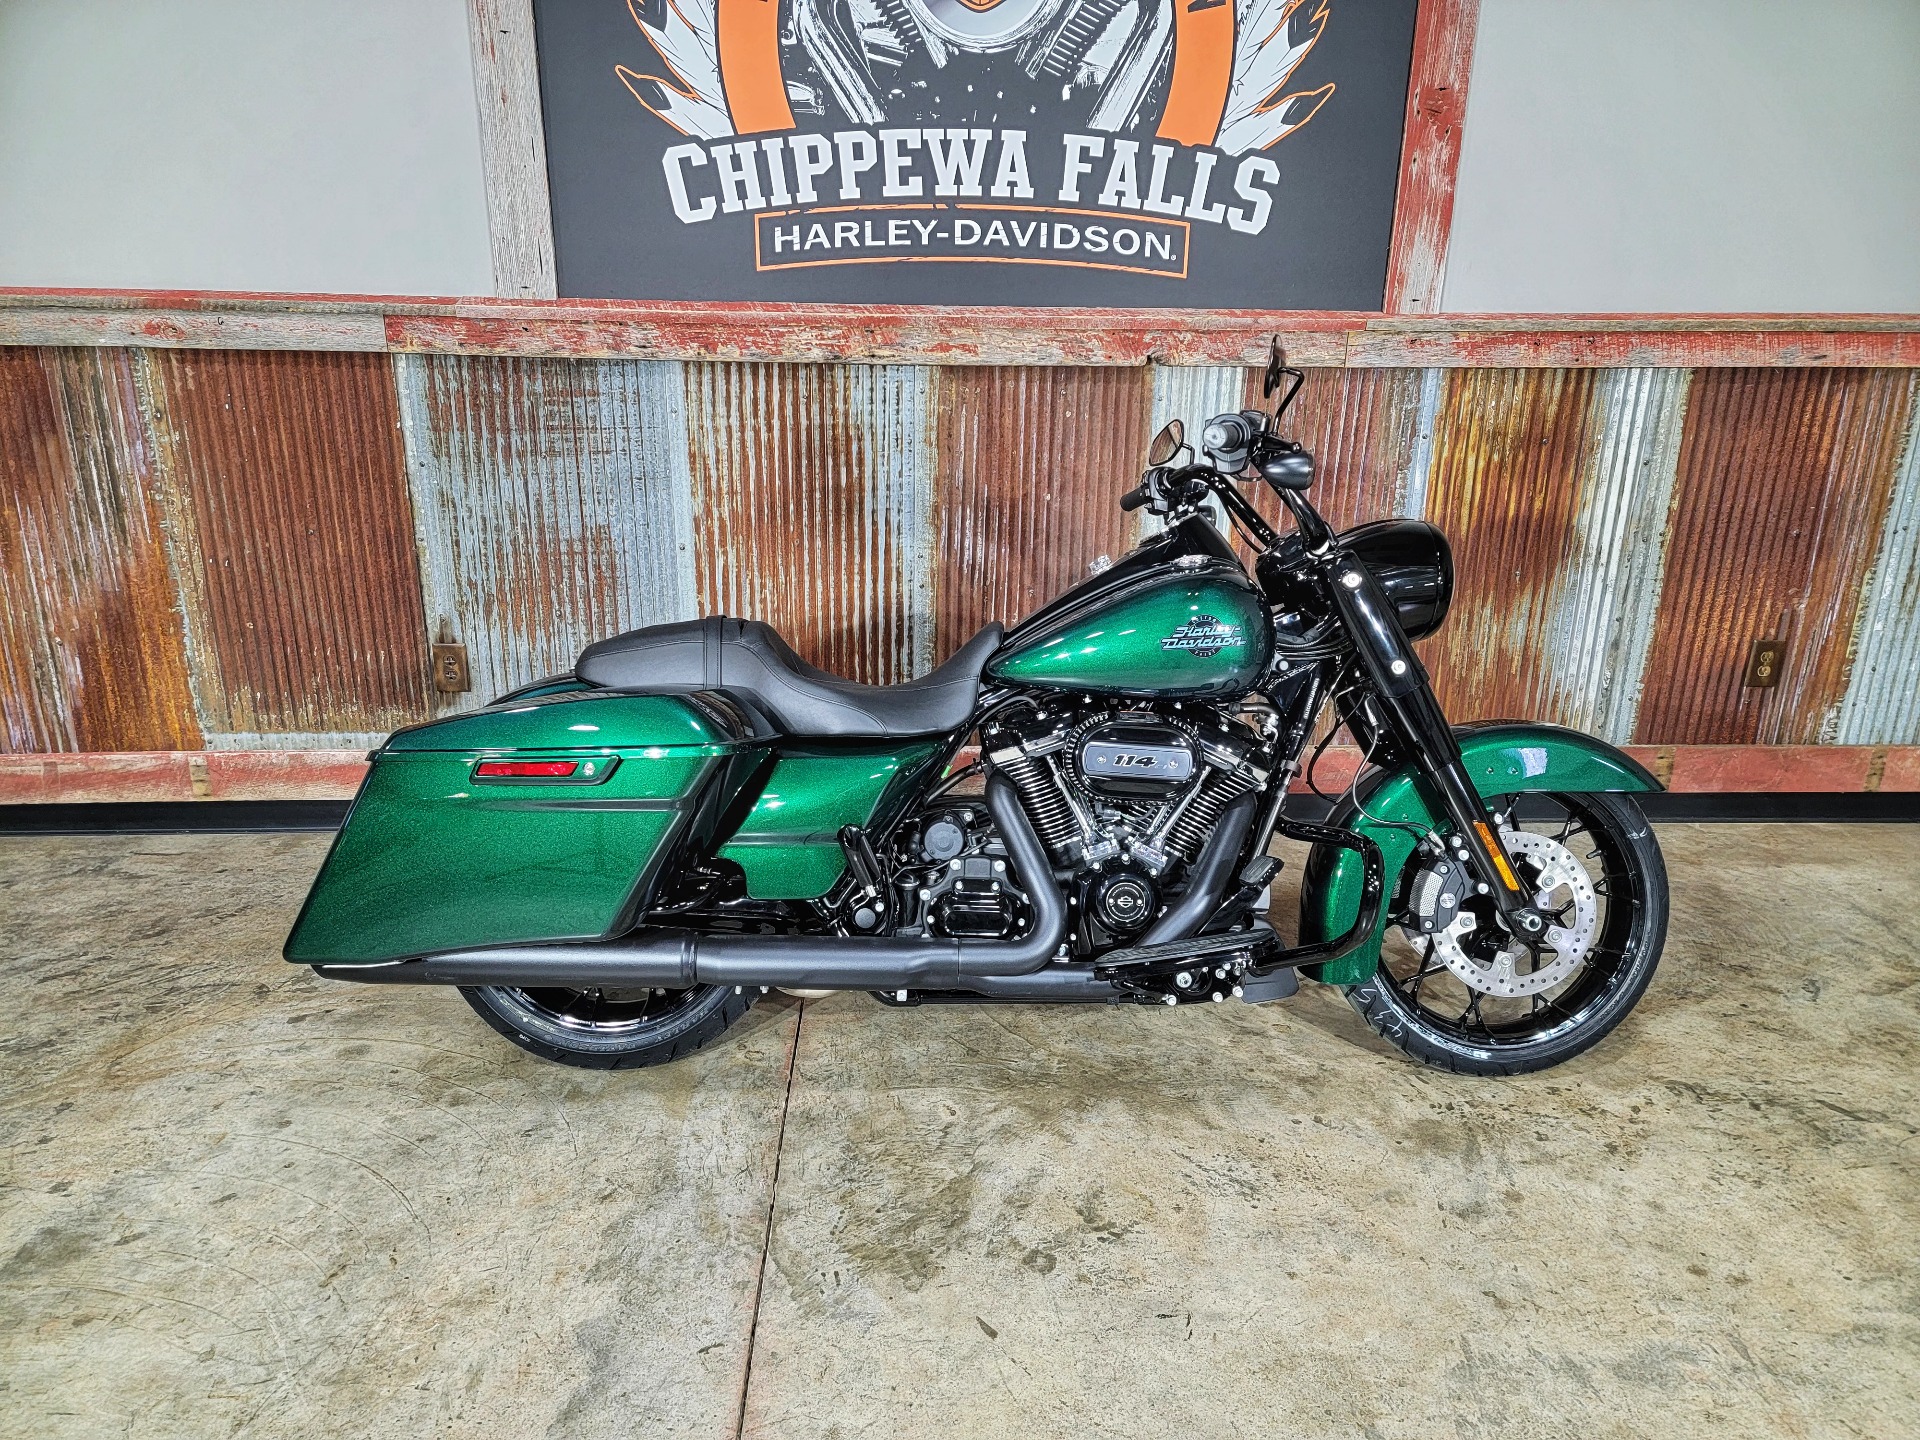 New 2021 Harley Davidson Road King Special Snake Venom Motorcycles In Chippewa Falls Wi Fl623291